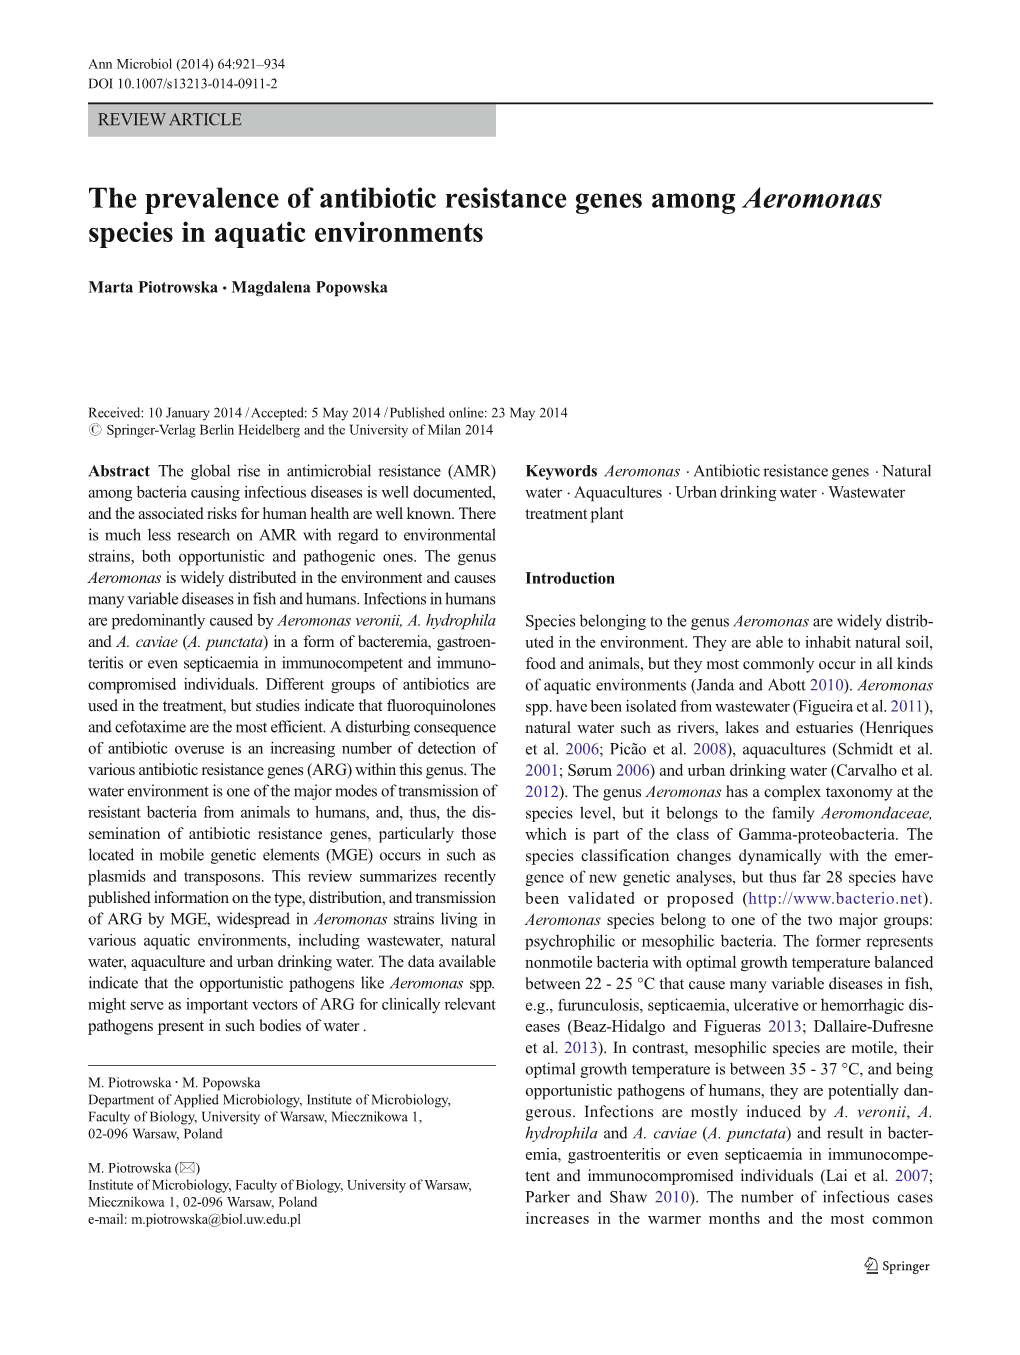 The Prevalence of Antibiotic Resistance Genes Among Aeromonas Species in Aquatic Environments